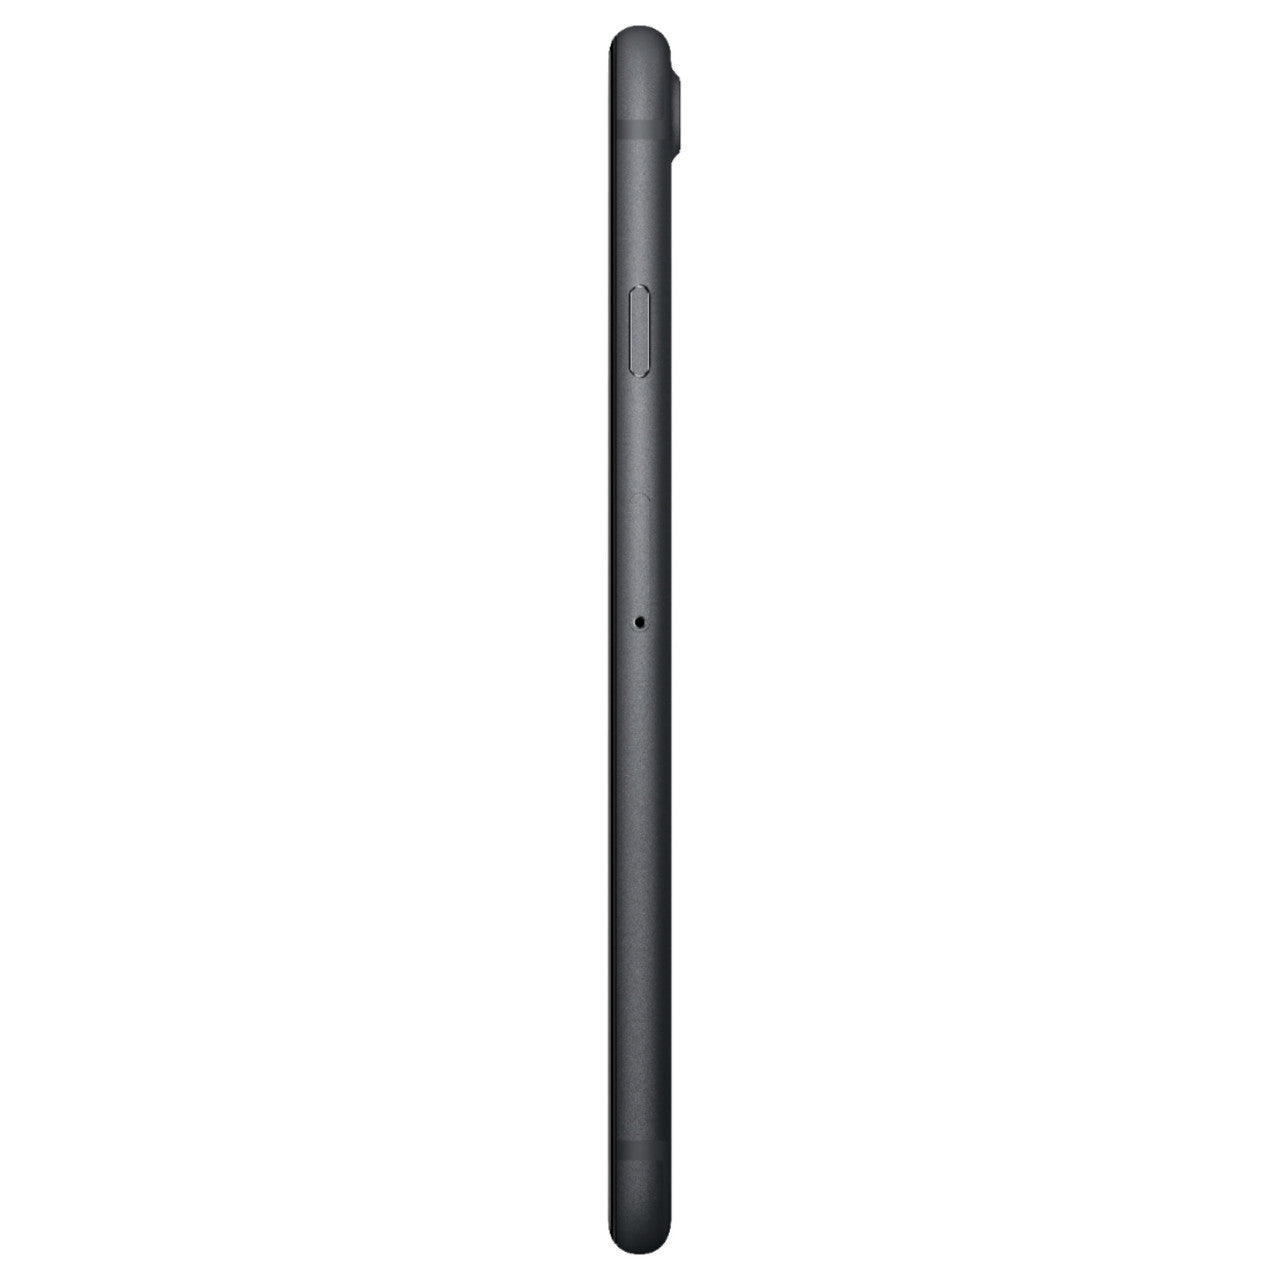 iPhone 7 32GB Schwarz (Akku über 90% maximale Kapazität)